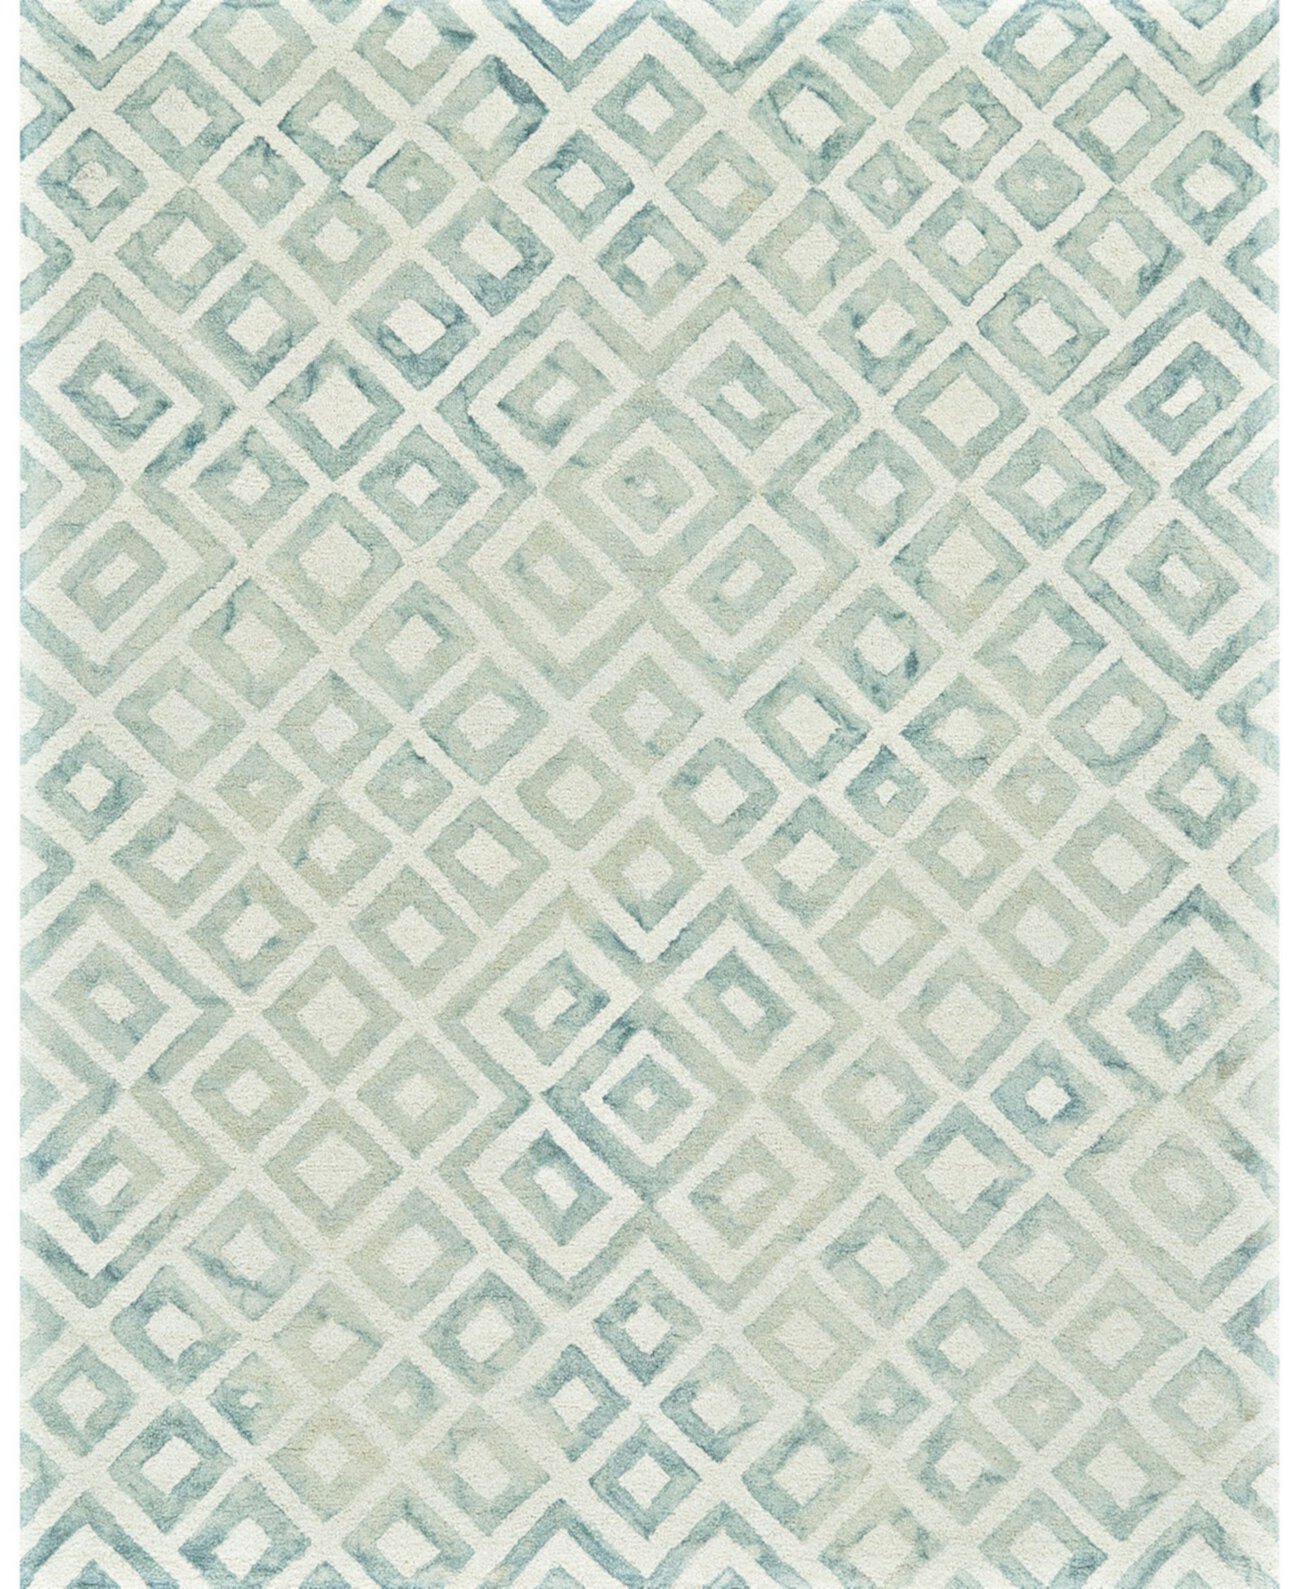 Rosa R8572 Бирюзовый коврик размером 2 x 3 фута Simply Woven